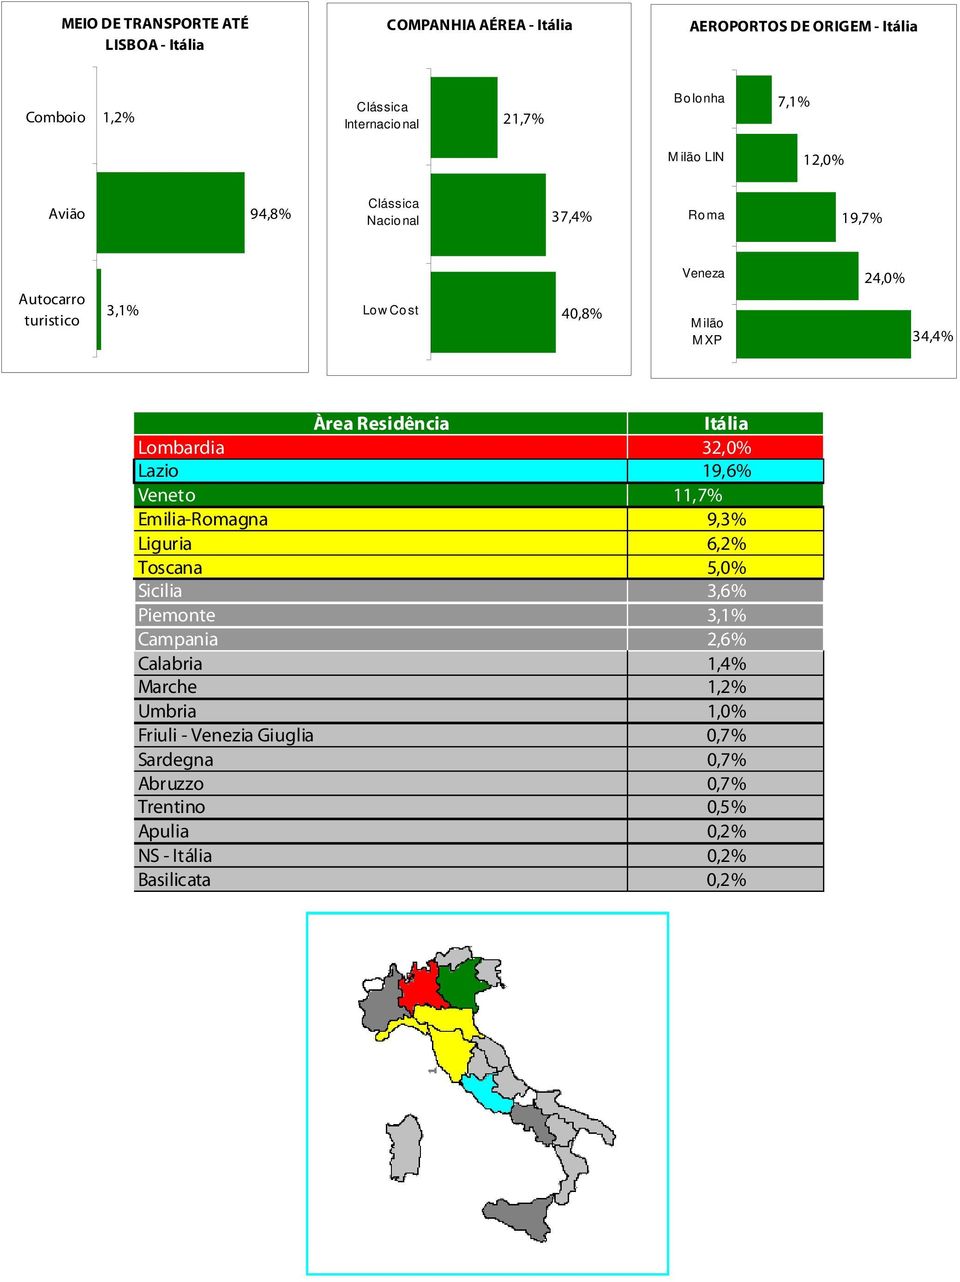 Lombardia 32,0% Lazio 19,6% Veneto 11,7% Emilia-Romagna Liguria Toscana 9,3% 6,2% 5,0% Sicilia 3,6% Piemonte 3,1% Campania 2,6% Calabria